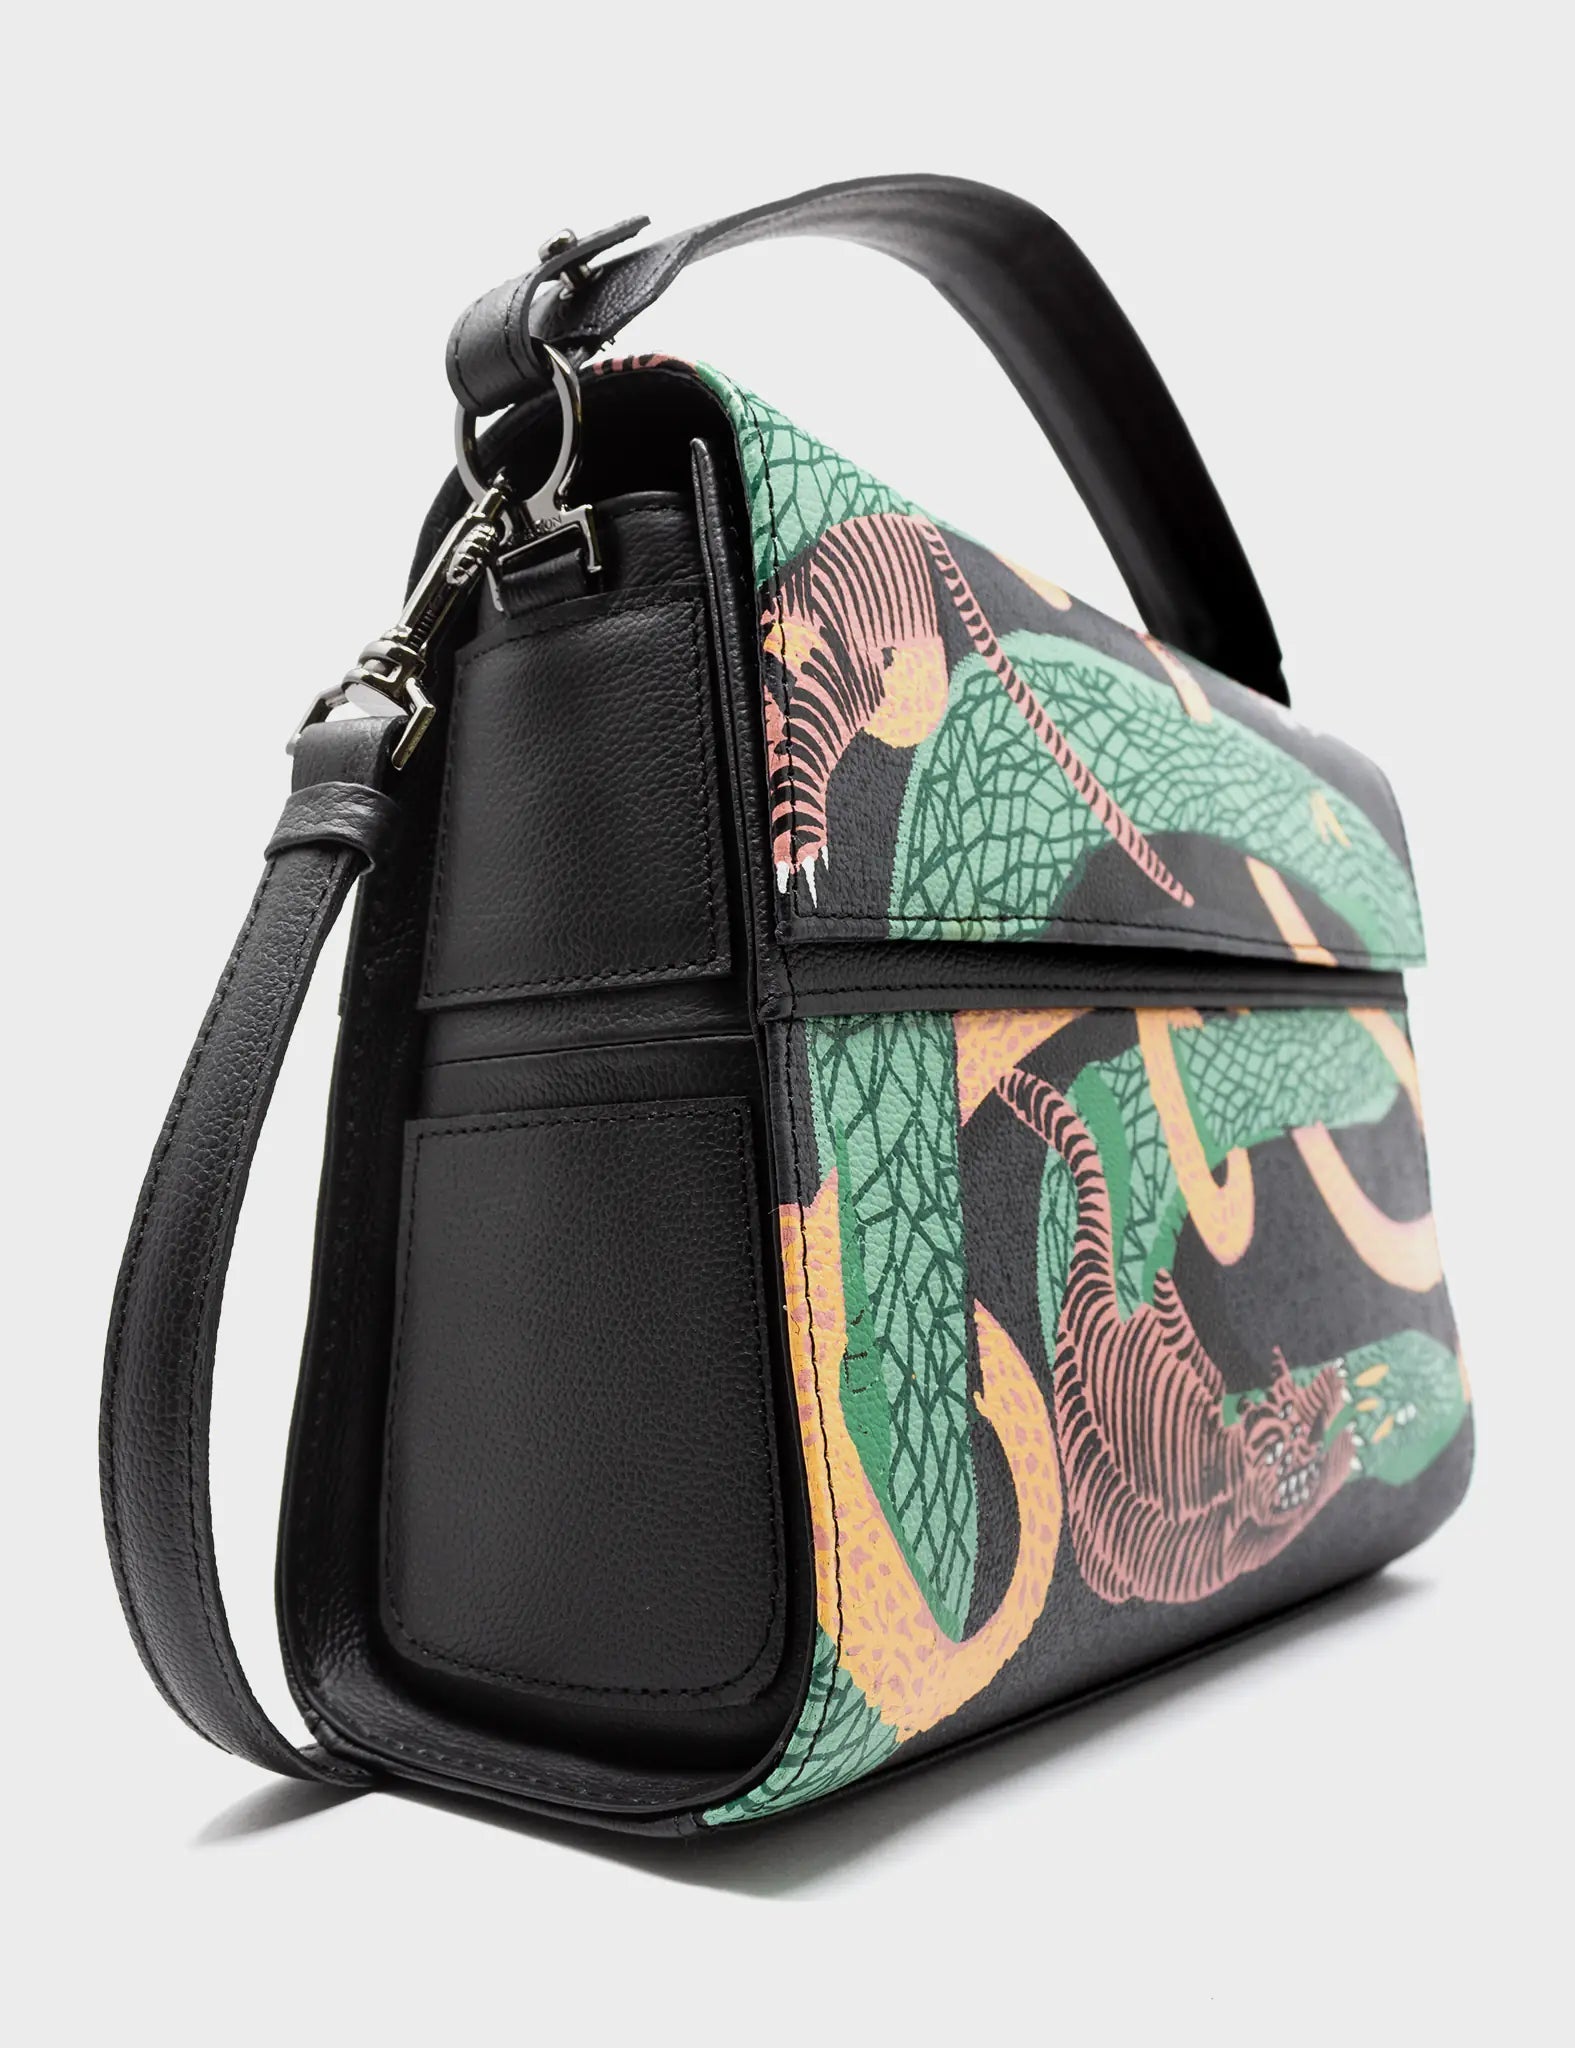 Medium Crossbody Handbag Black Leather - Tiger And Snake Print - Side view